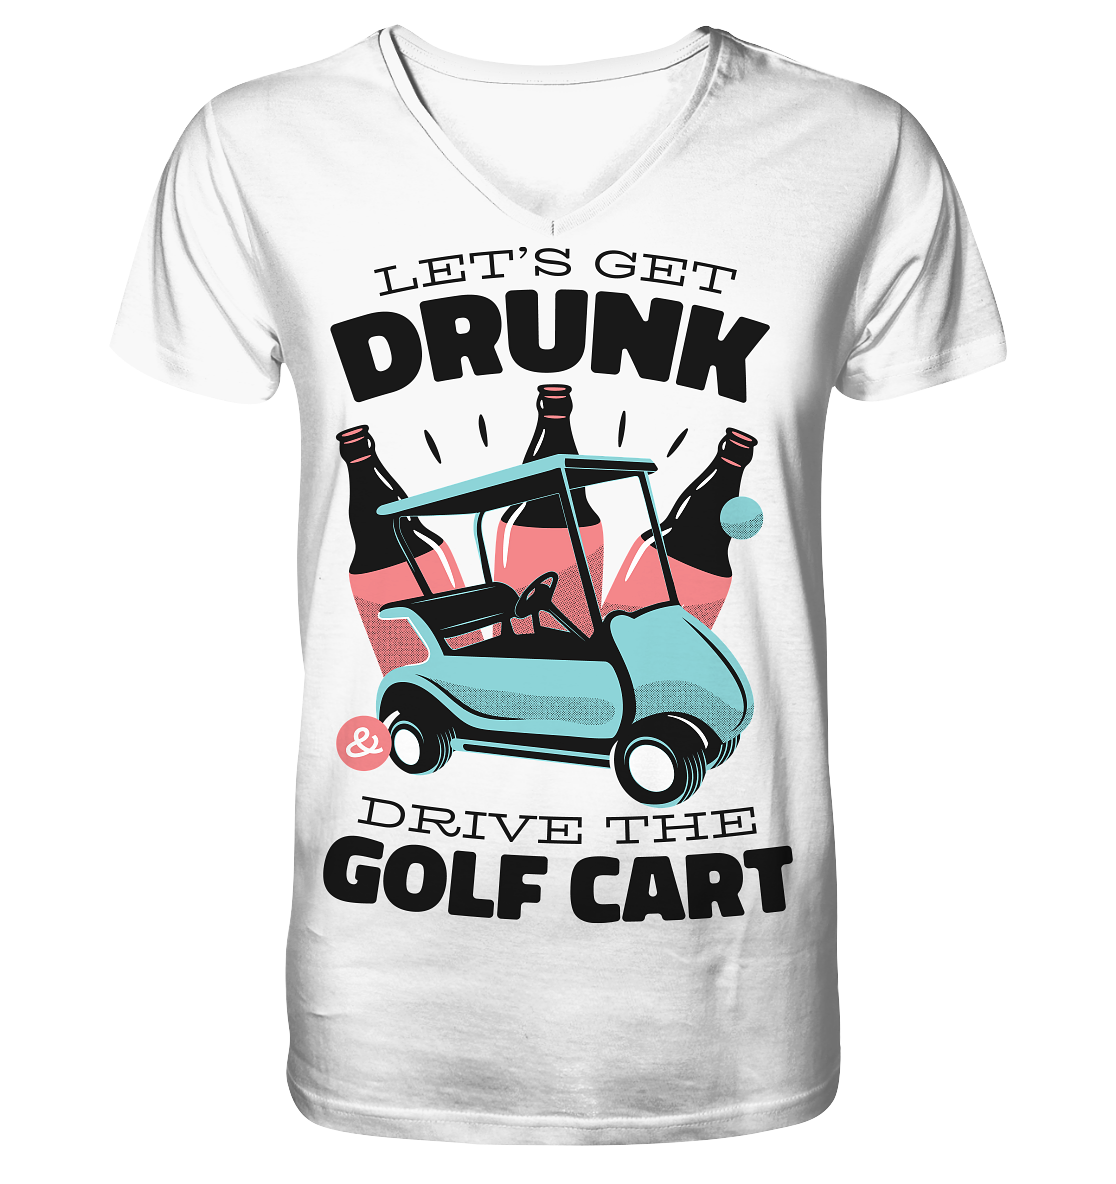 Let's get drunk drive the golf cart, Let's get drunk drive the golf cart - V-Neck Shirt